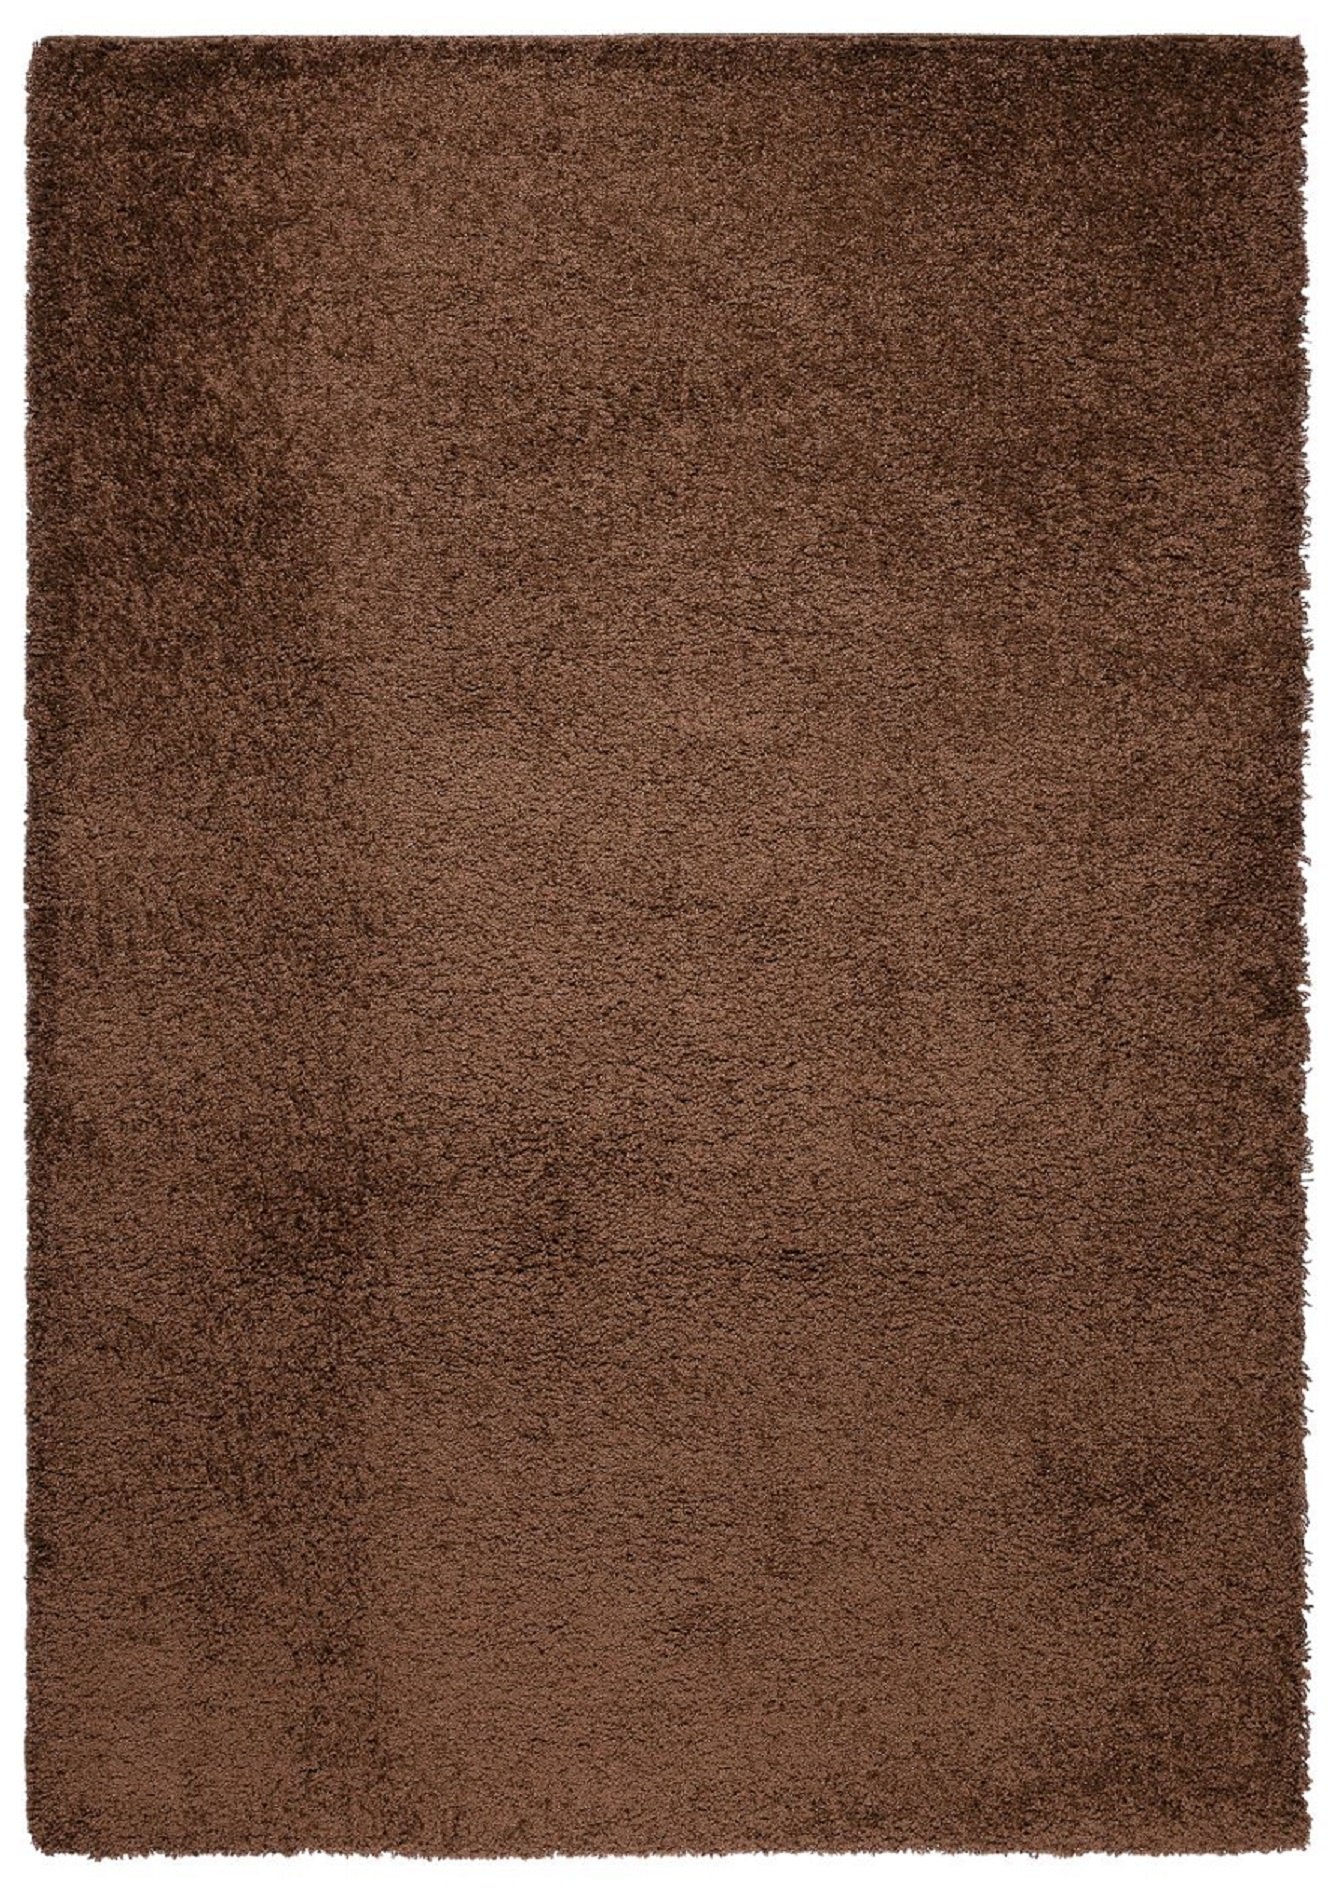 Glimlach US dollar Verstrikking Hoogpolig tapijt bruin 30 mm | Onlinemattenshop